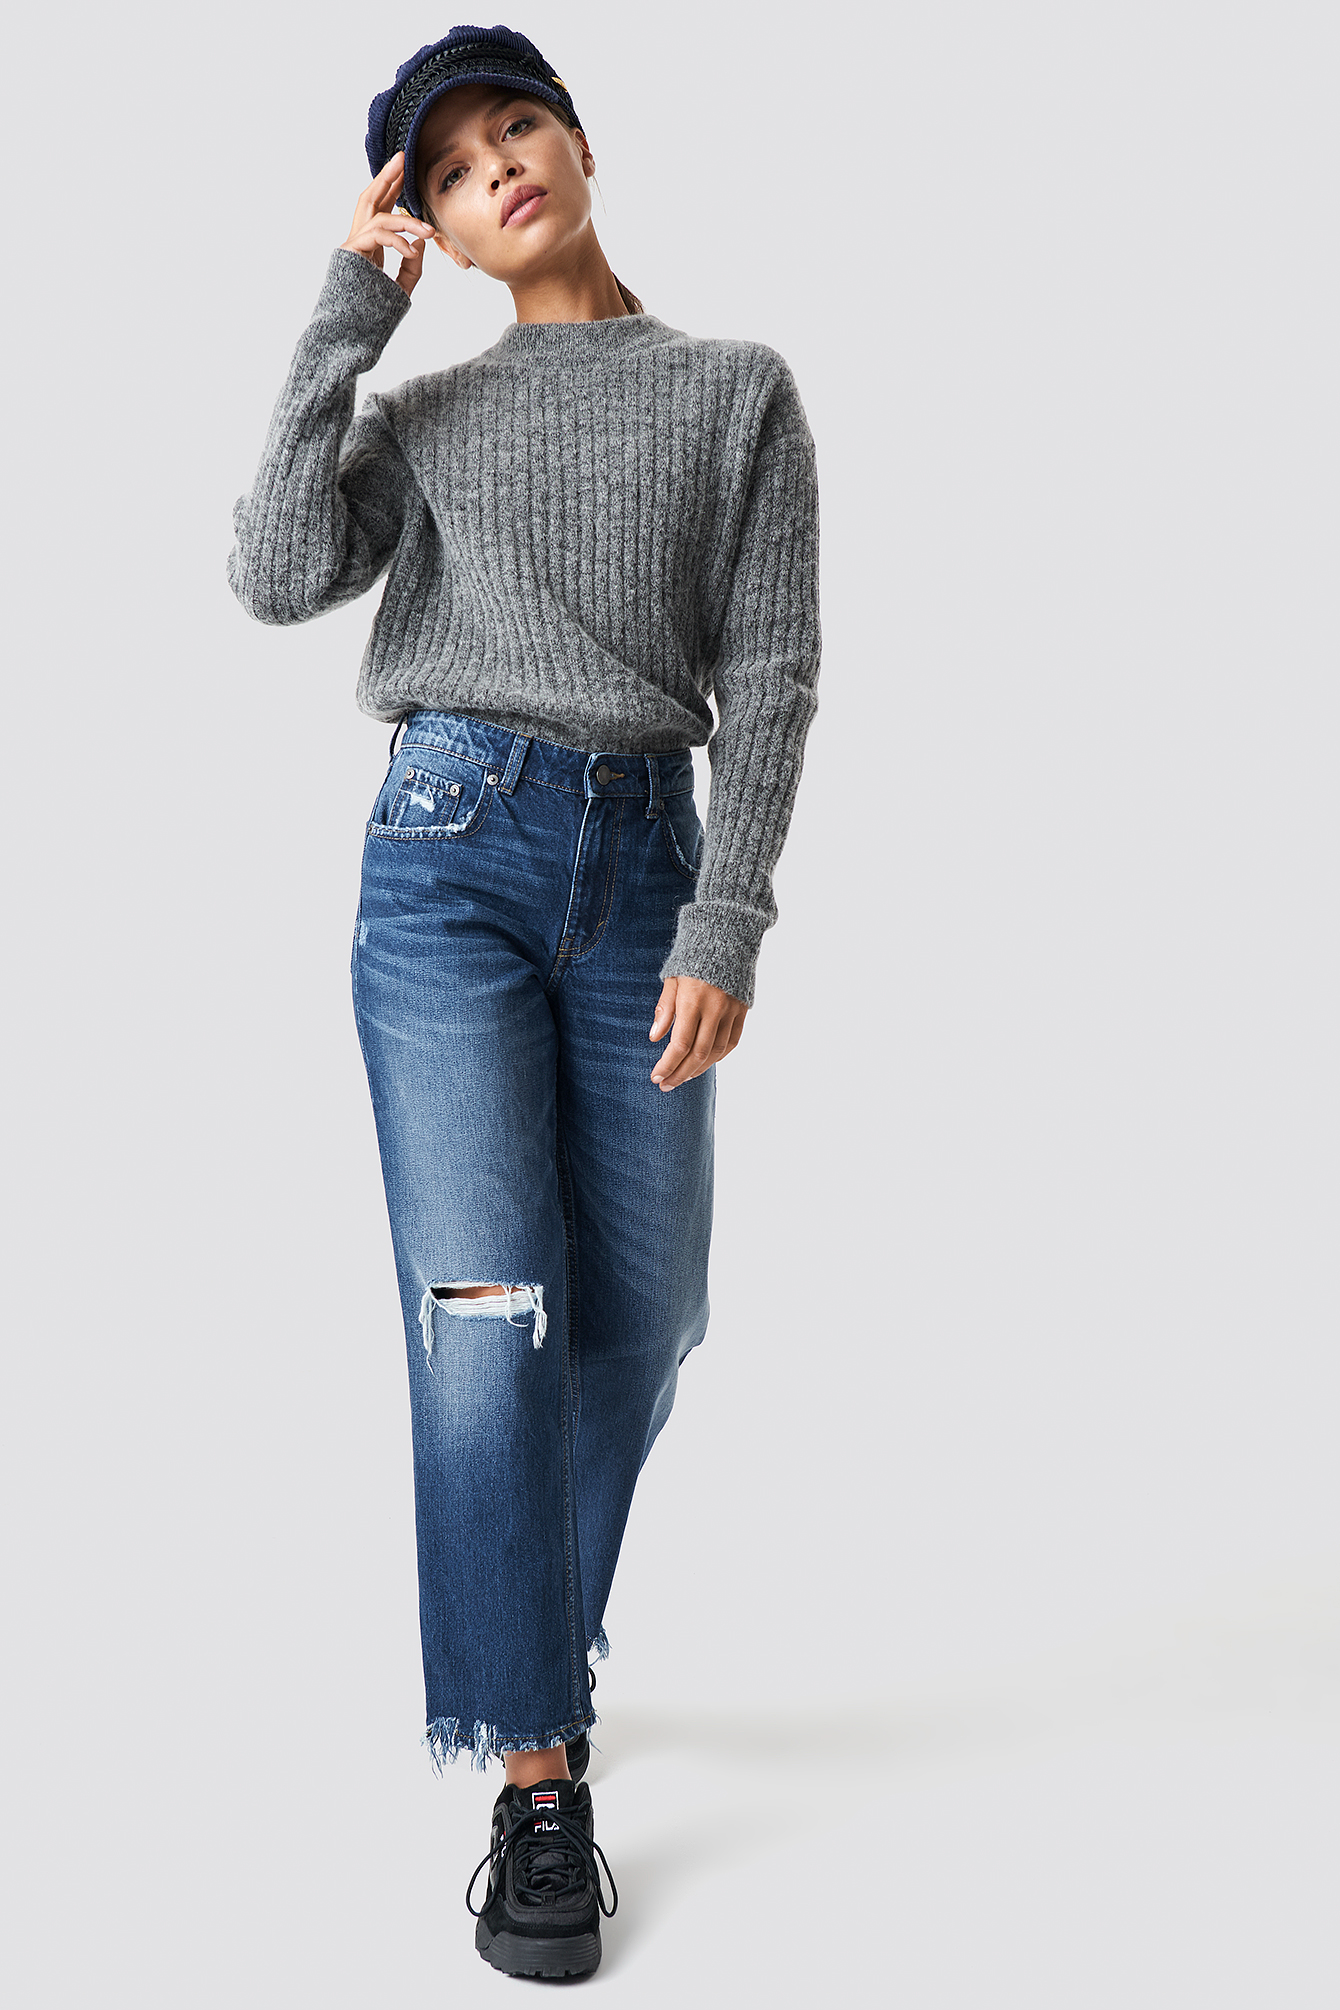 cheap monday revive jeans